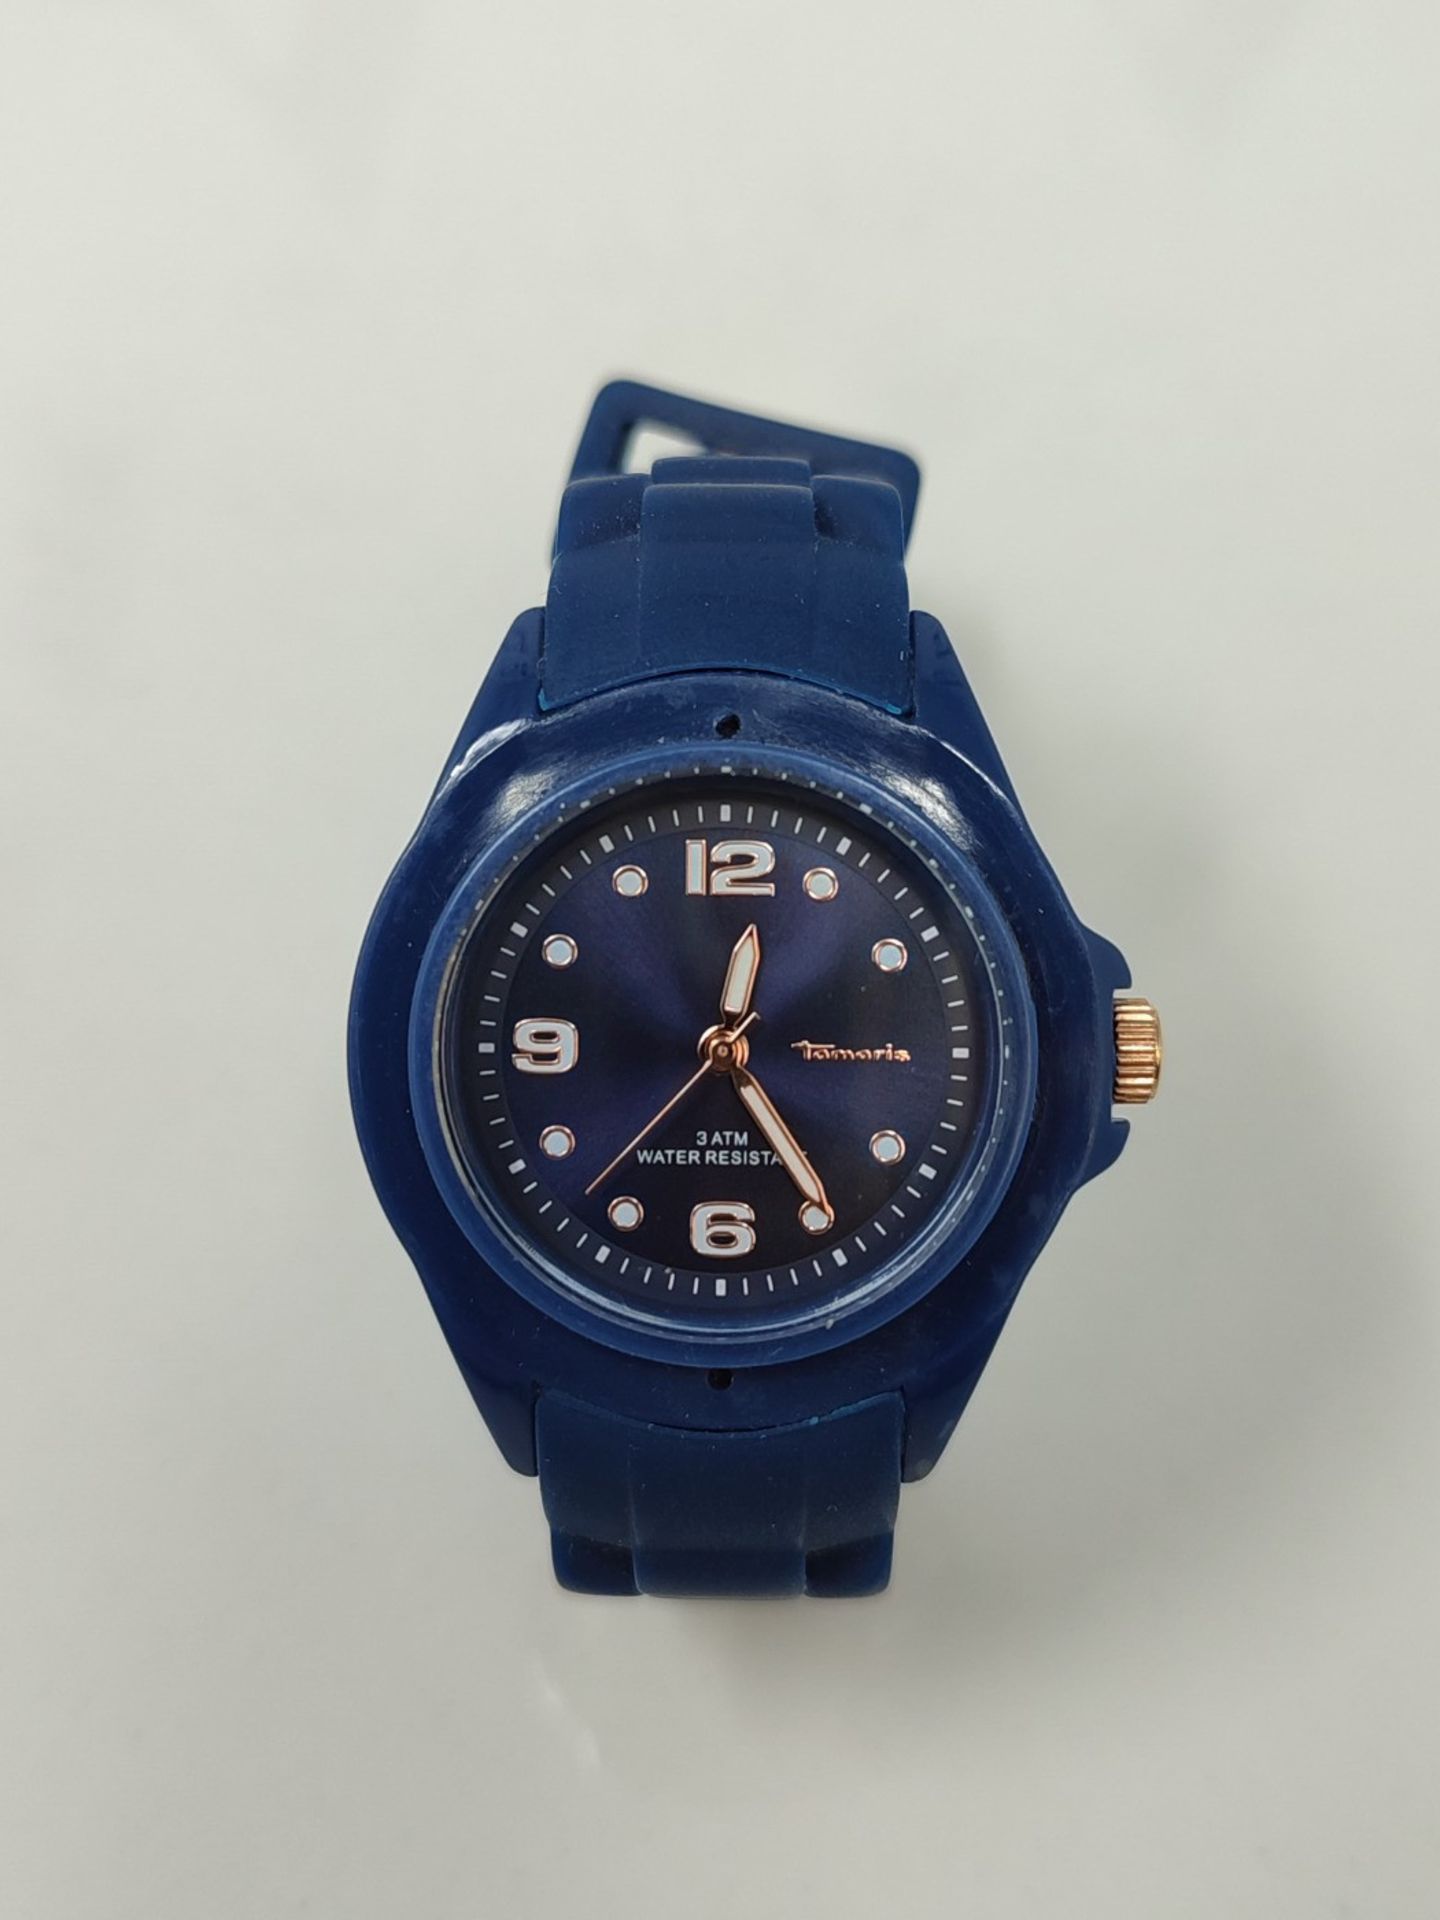 Tamaris Women's Analog Quartz Watch with Silicone Strap TT-0127-PQ, Dark Blue - Image 2 of 3